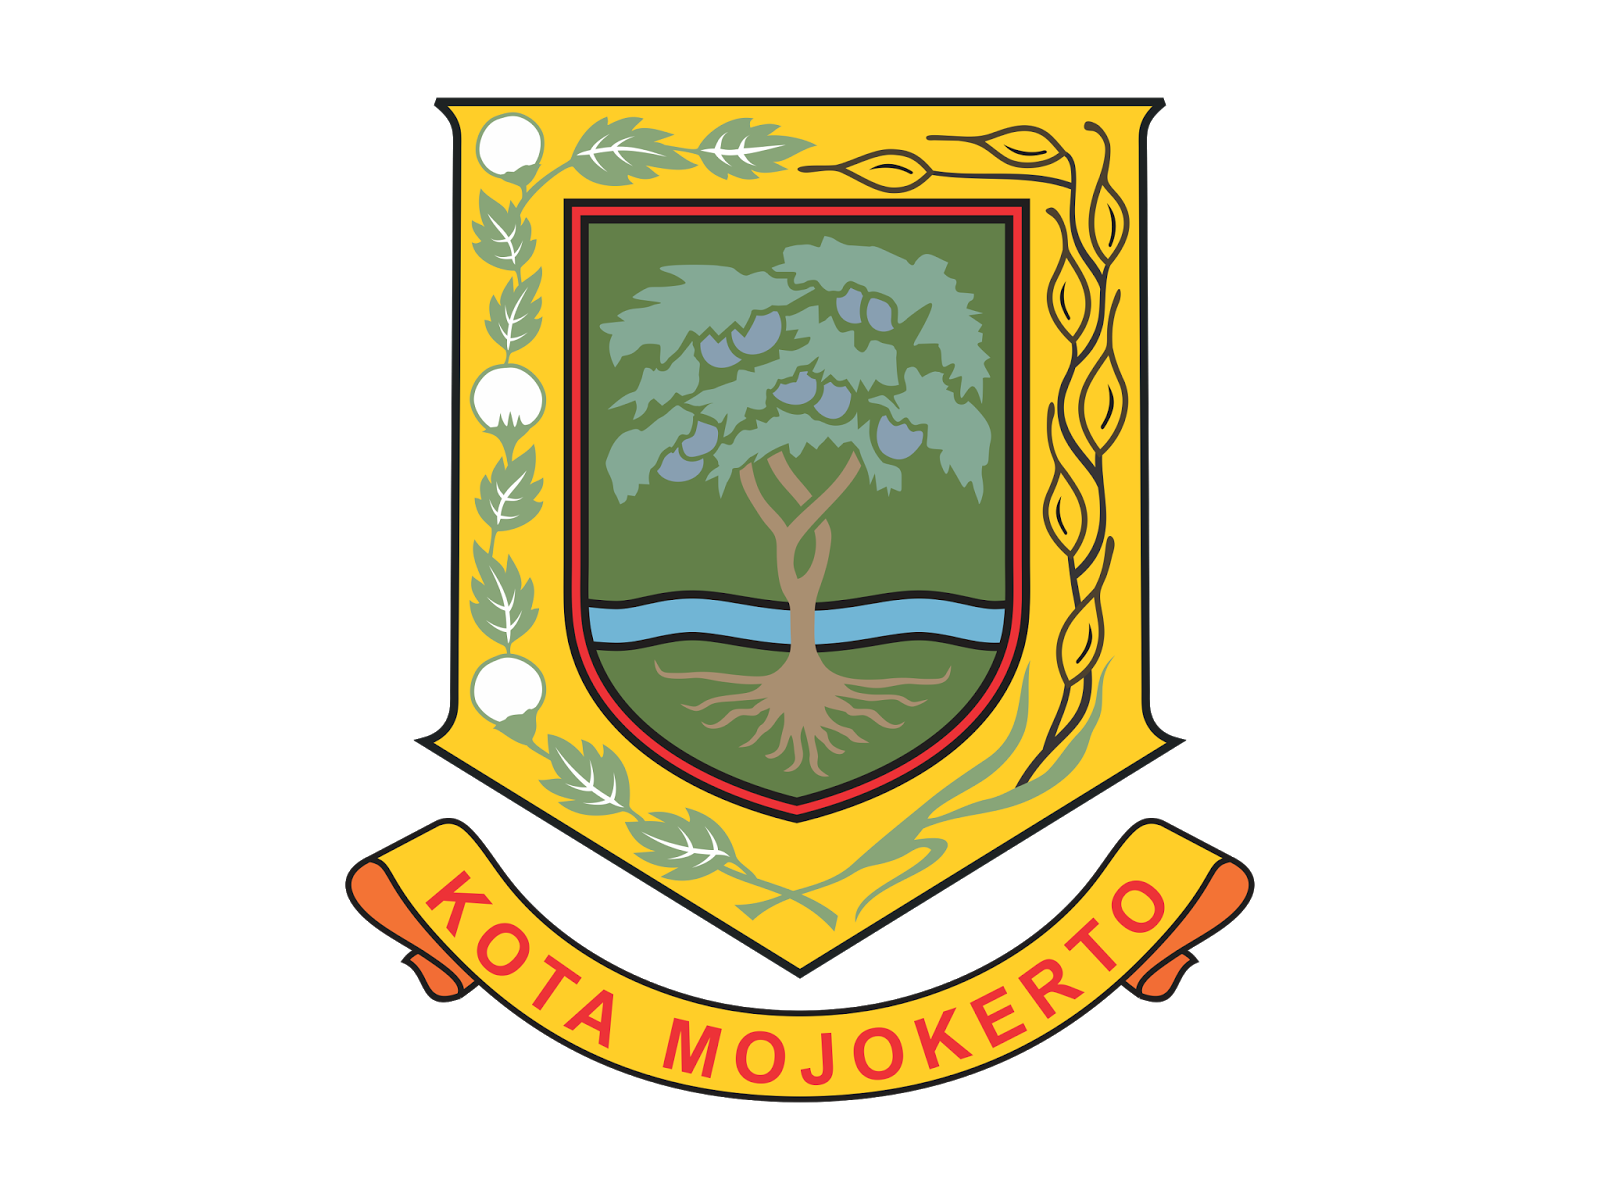 Kota Mojokerto